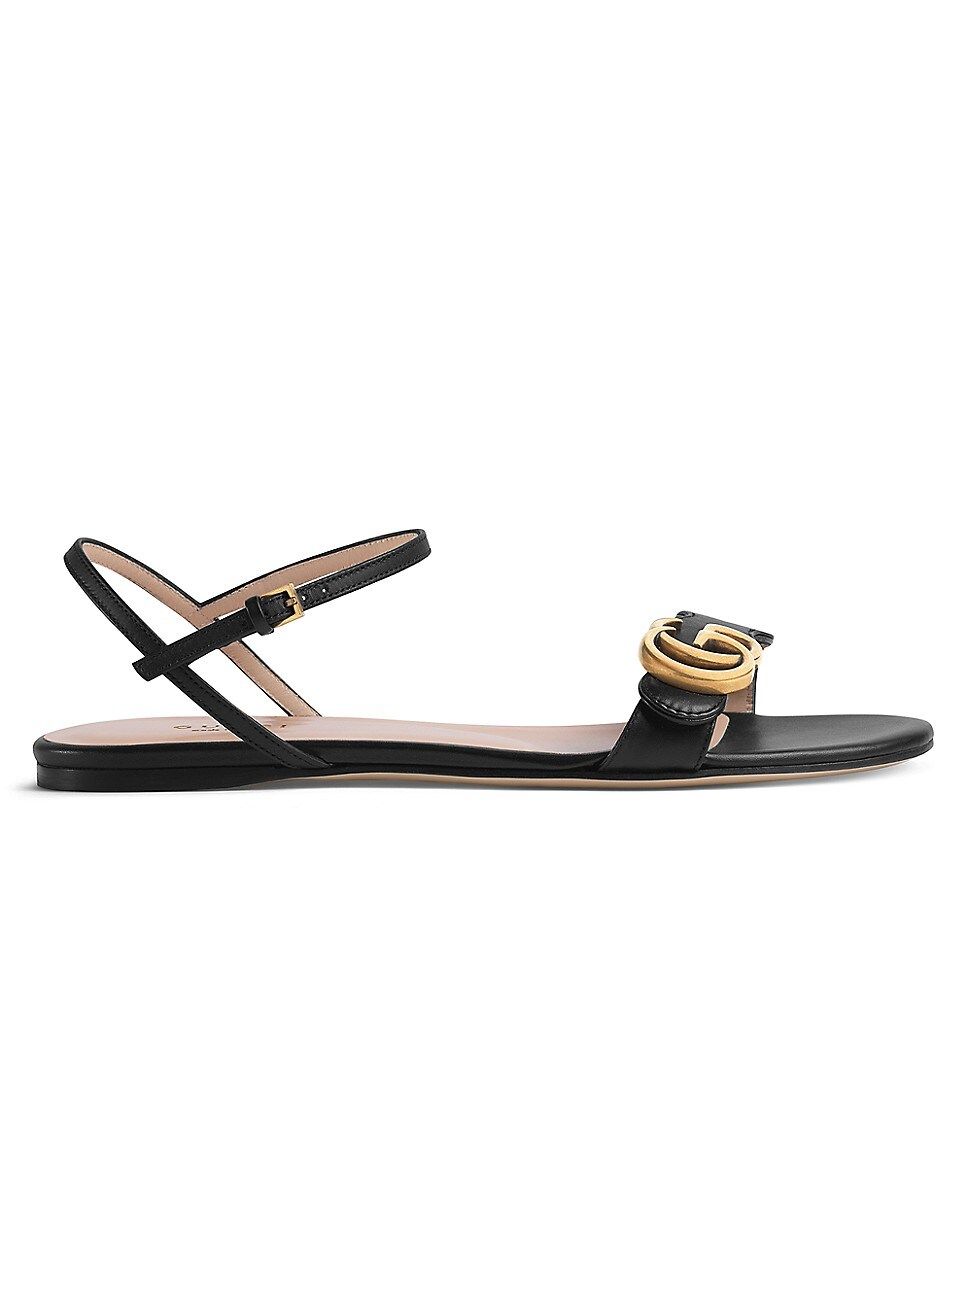 Gucci Women's Marmont Leather Double G Sandals - Black - Size 4 | Saks Fifth Avenue